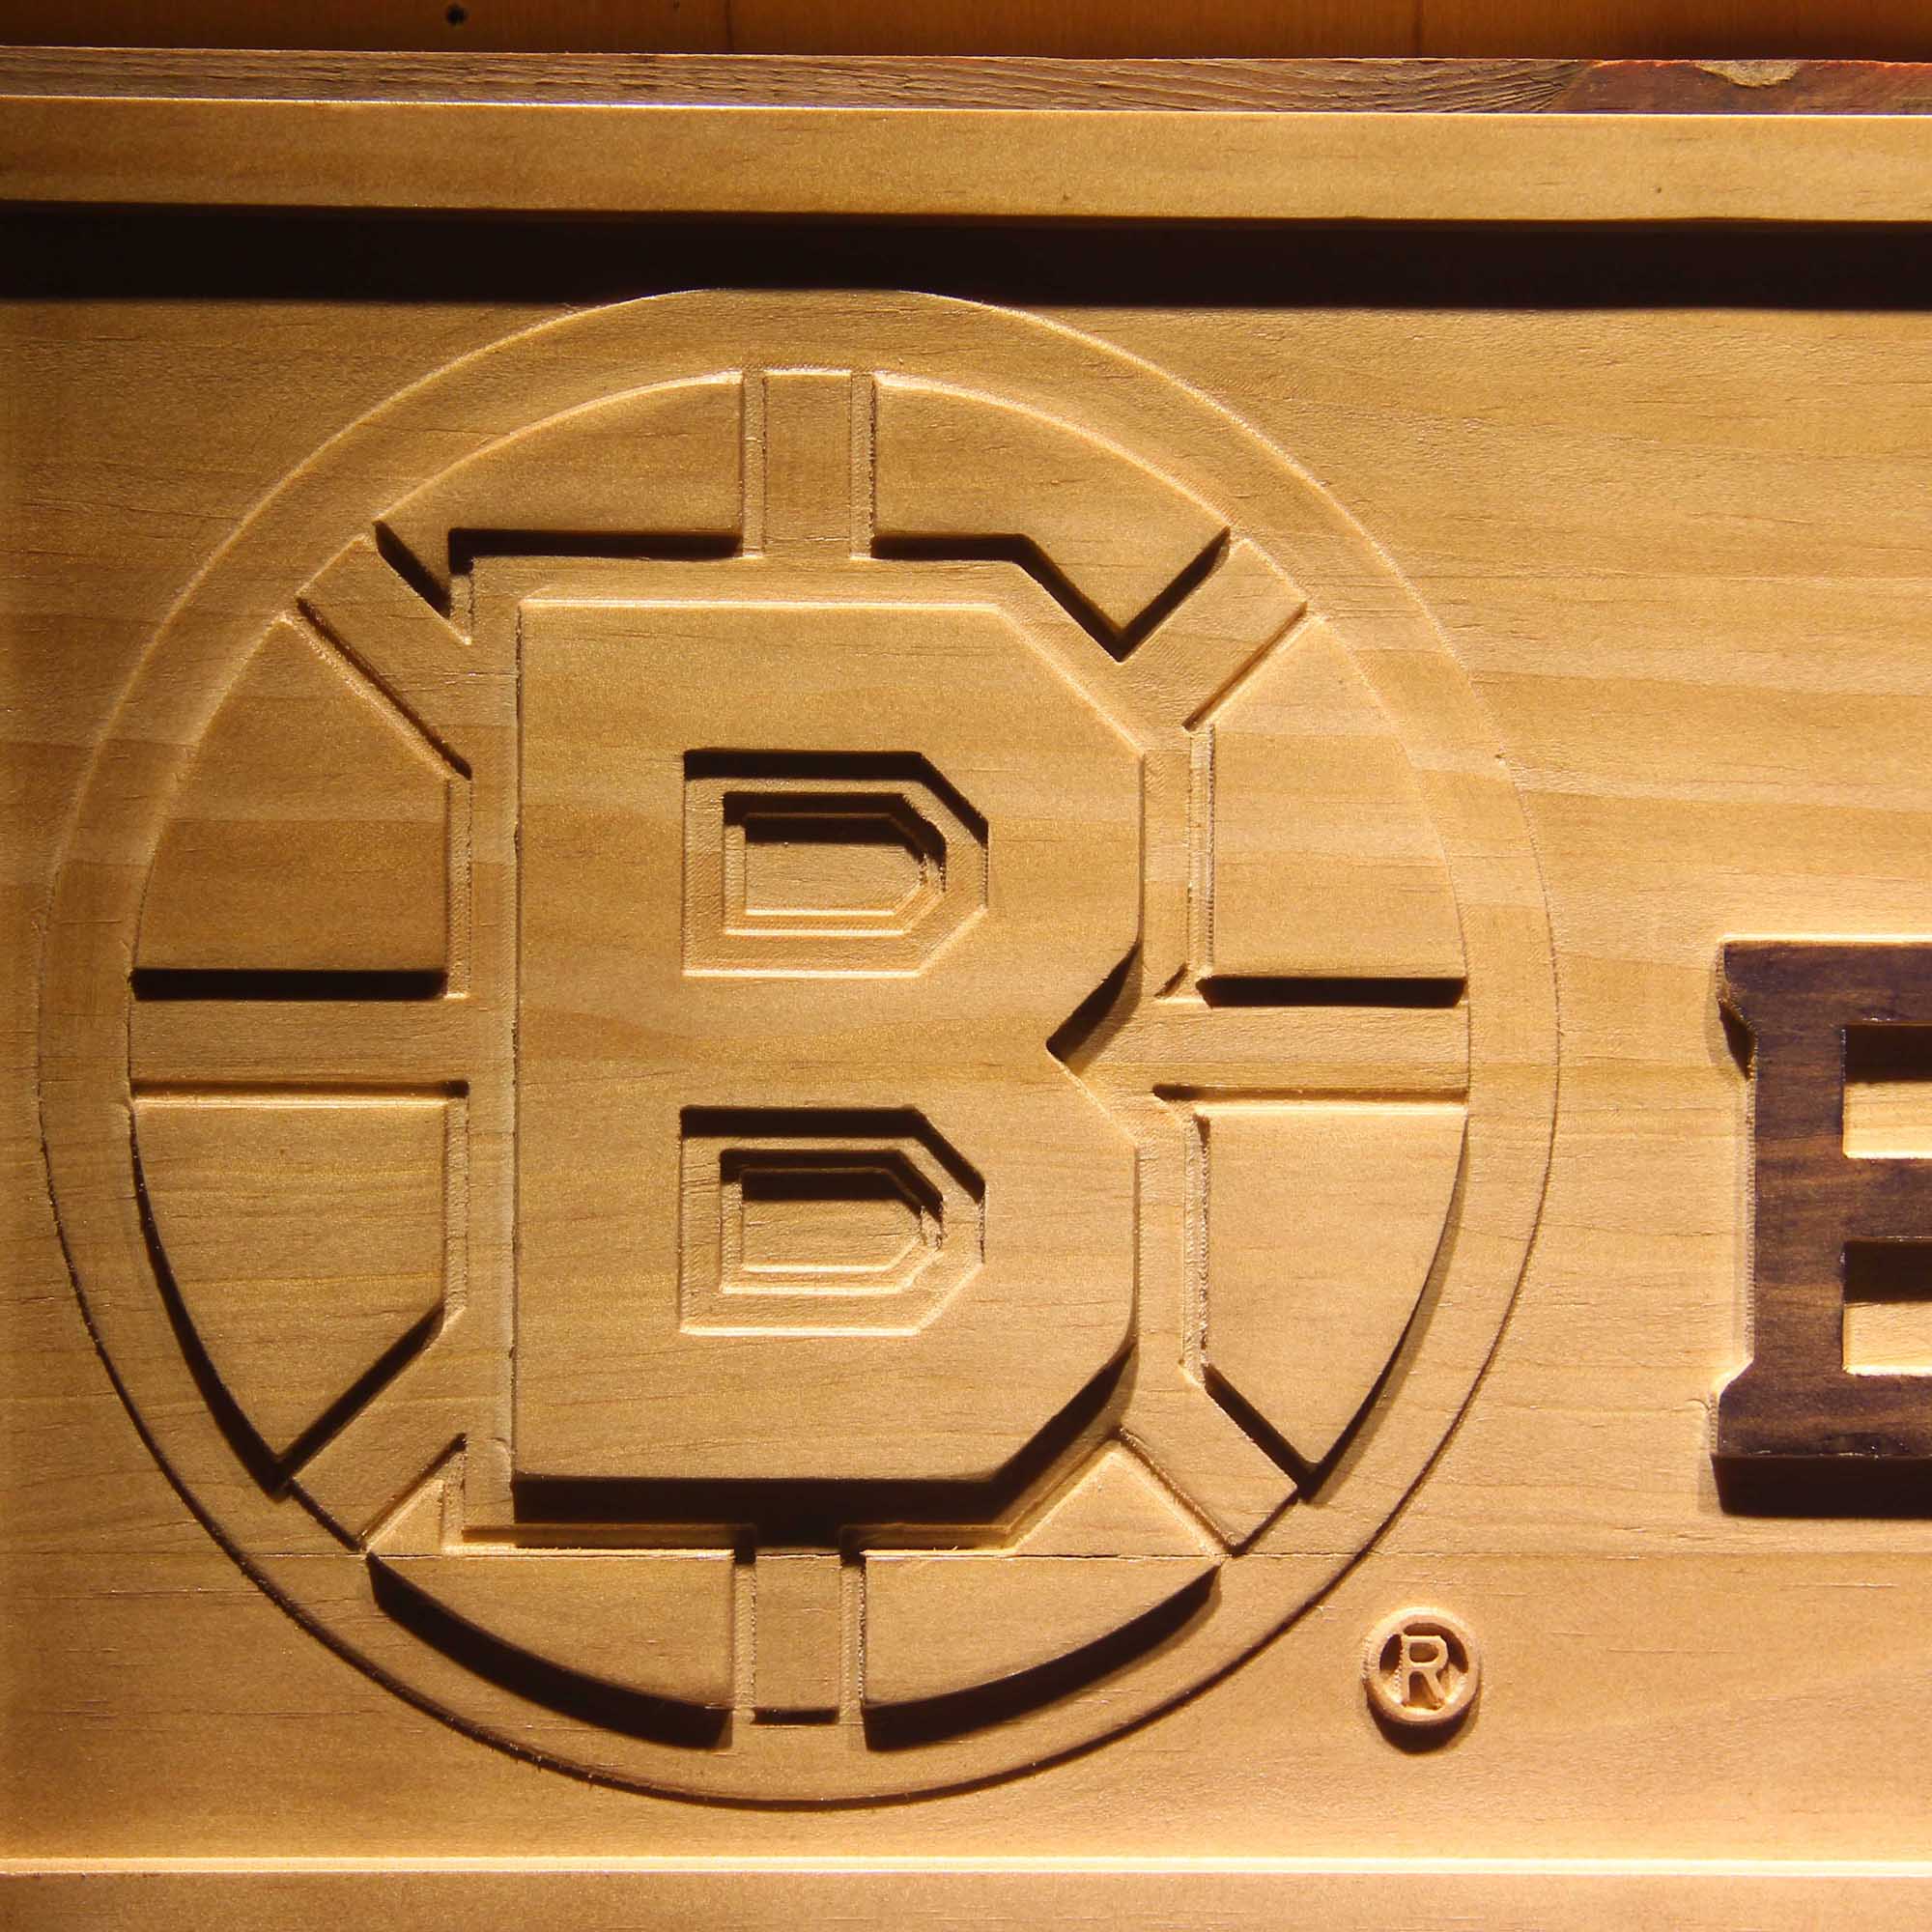 Boston Bruins Hockey Man Cave Sport 3D Wooden Engrave Sign